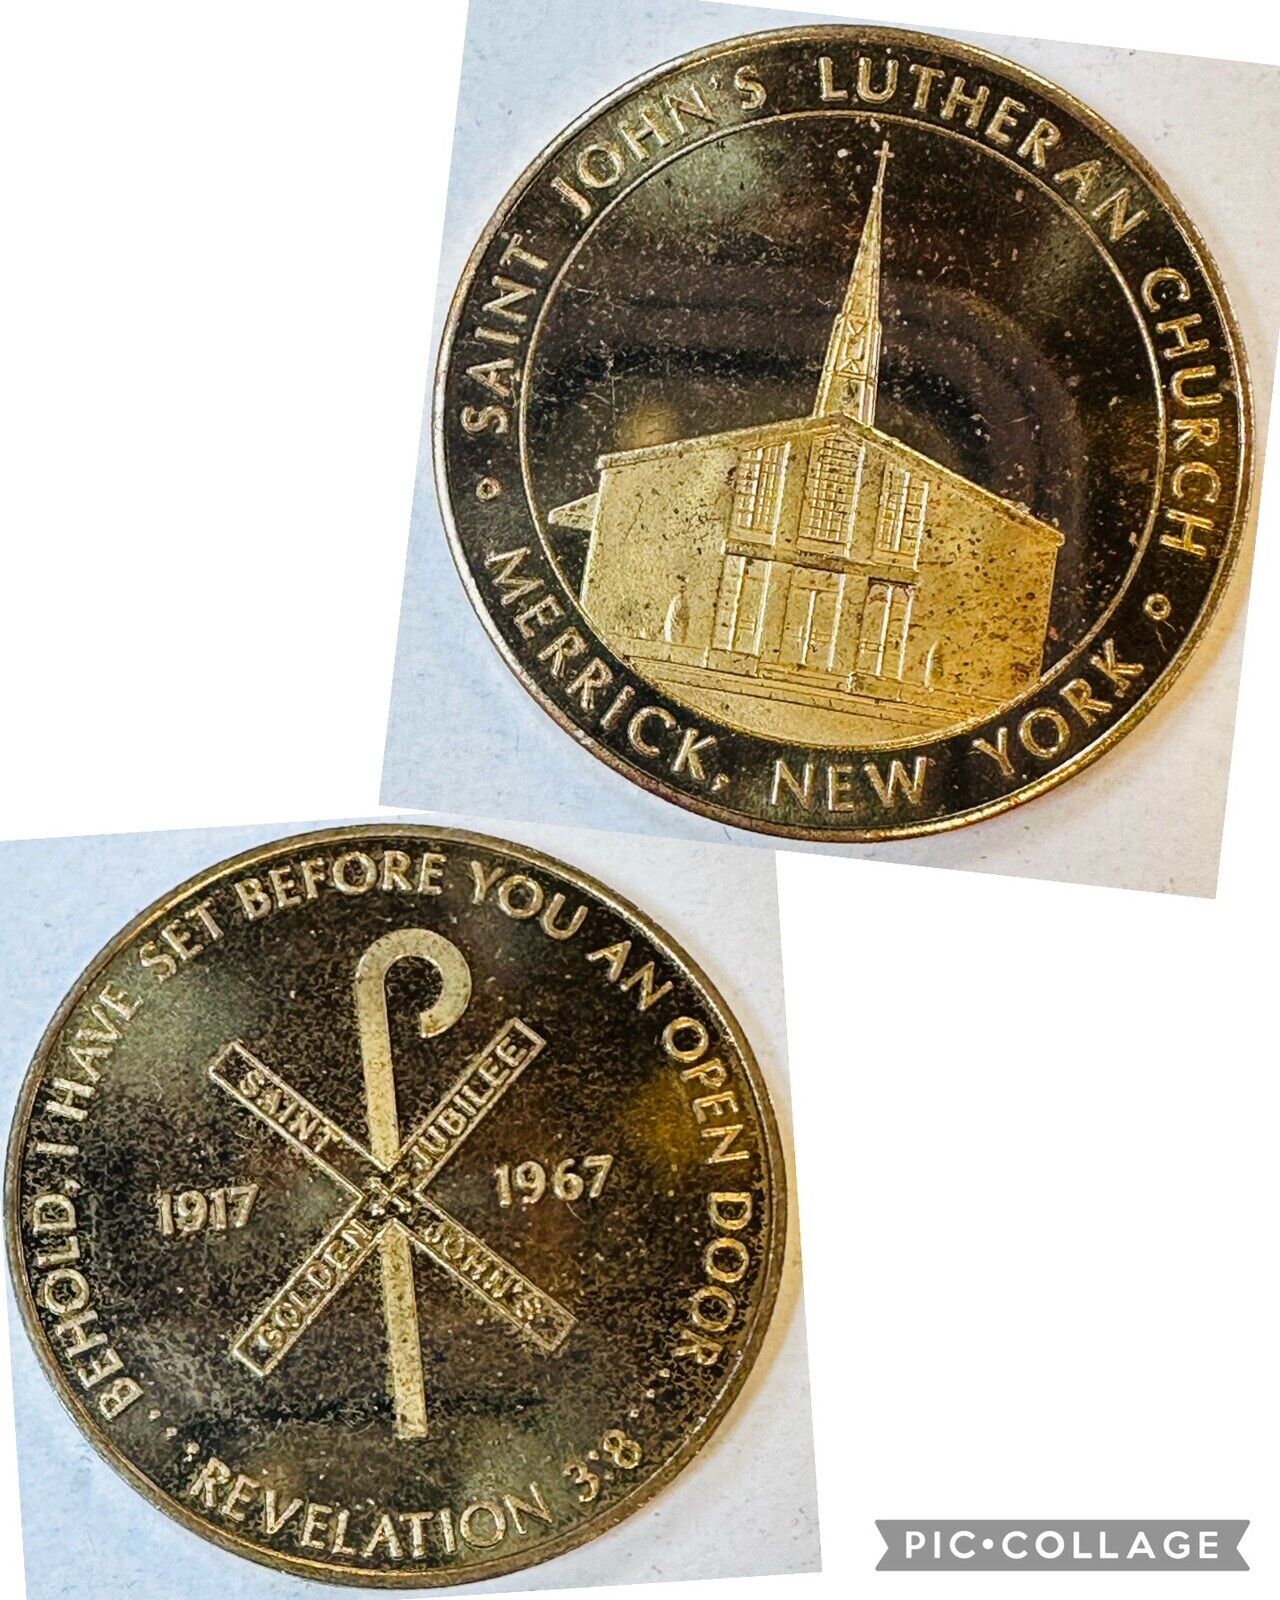 Saint John’s Lutheran Church Merrick, New York 1917-1967 Golden Jubilee Medal 